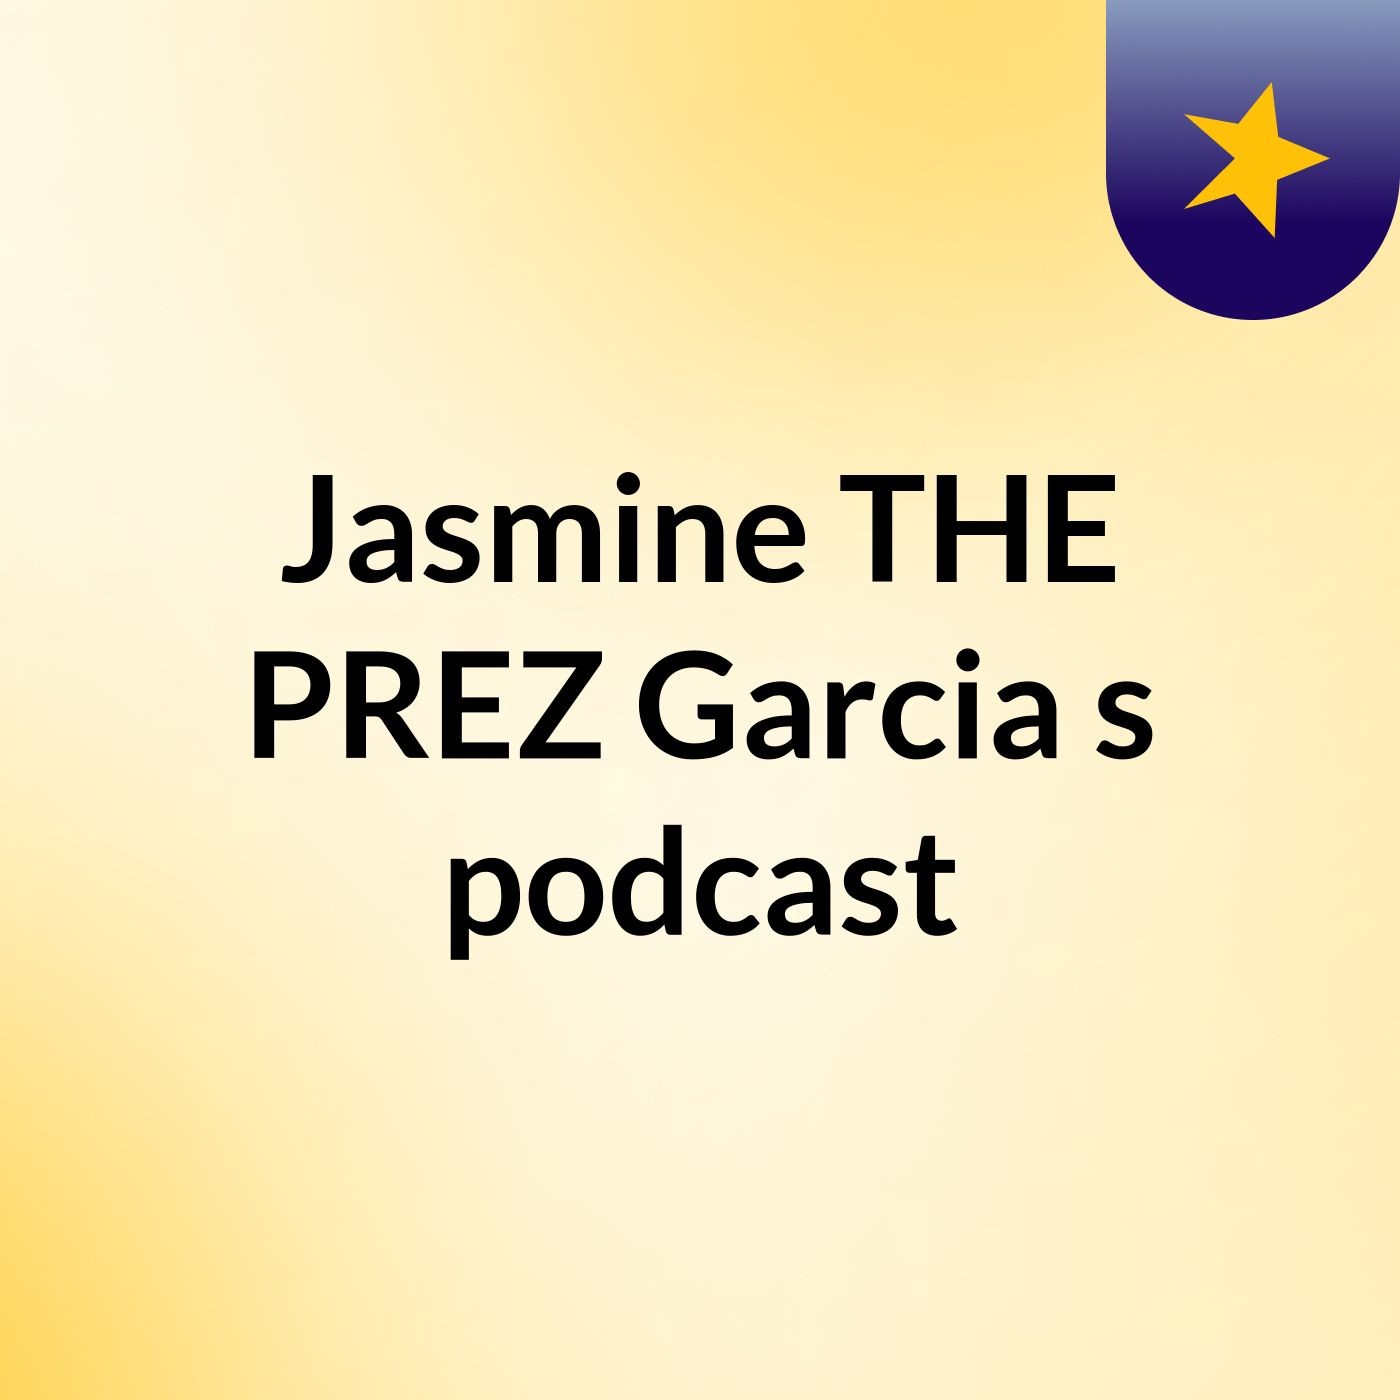 Episode 4 - Jasmine THE PREZ Garcia's podcast